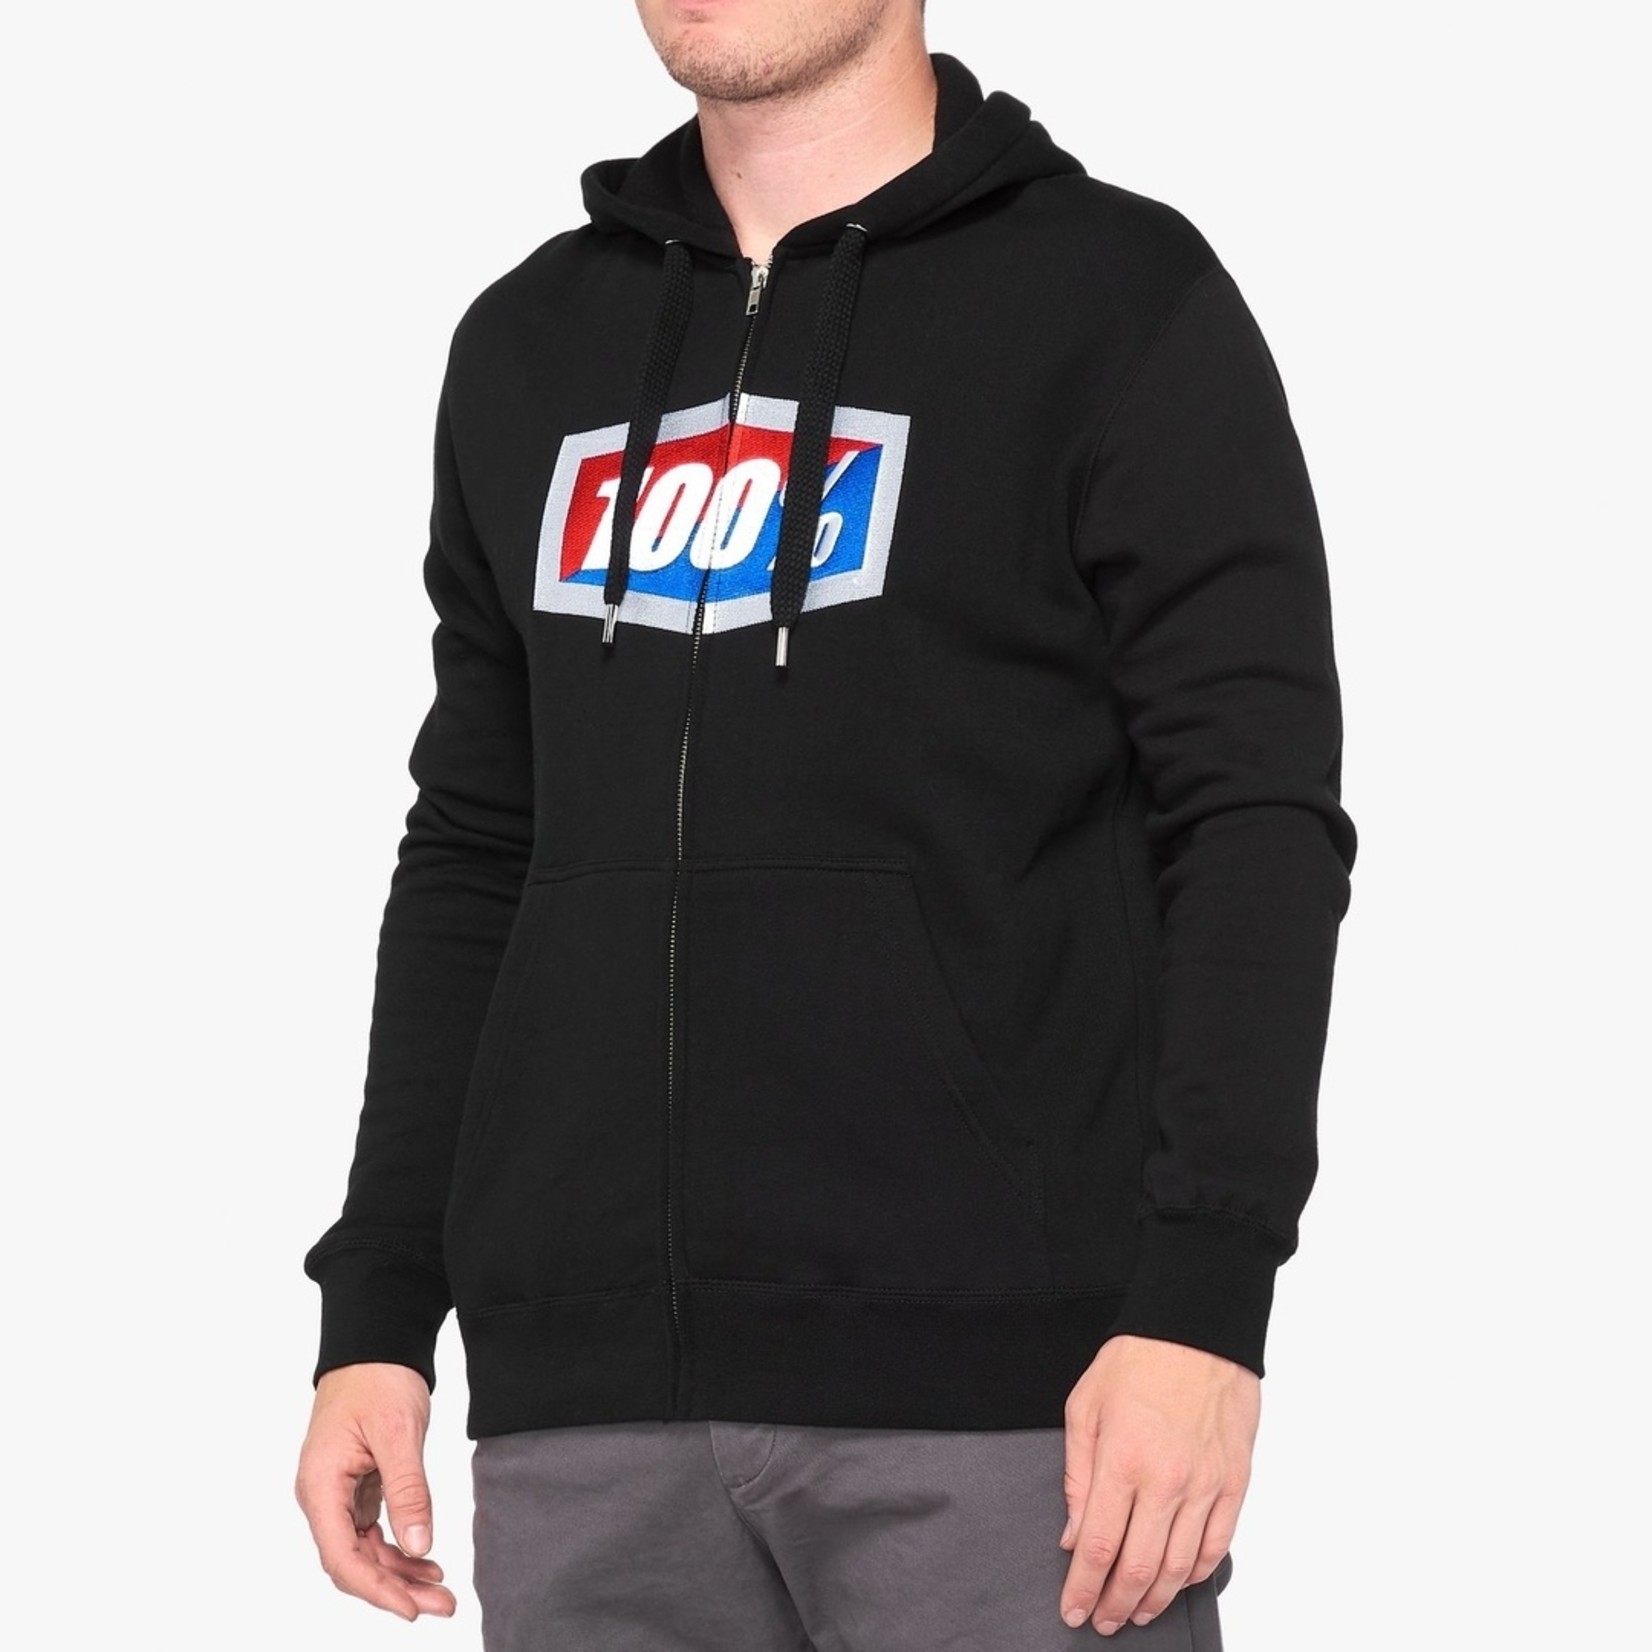 1 100% Official Hooded Zip Sweatshirt - Black